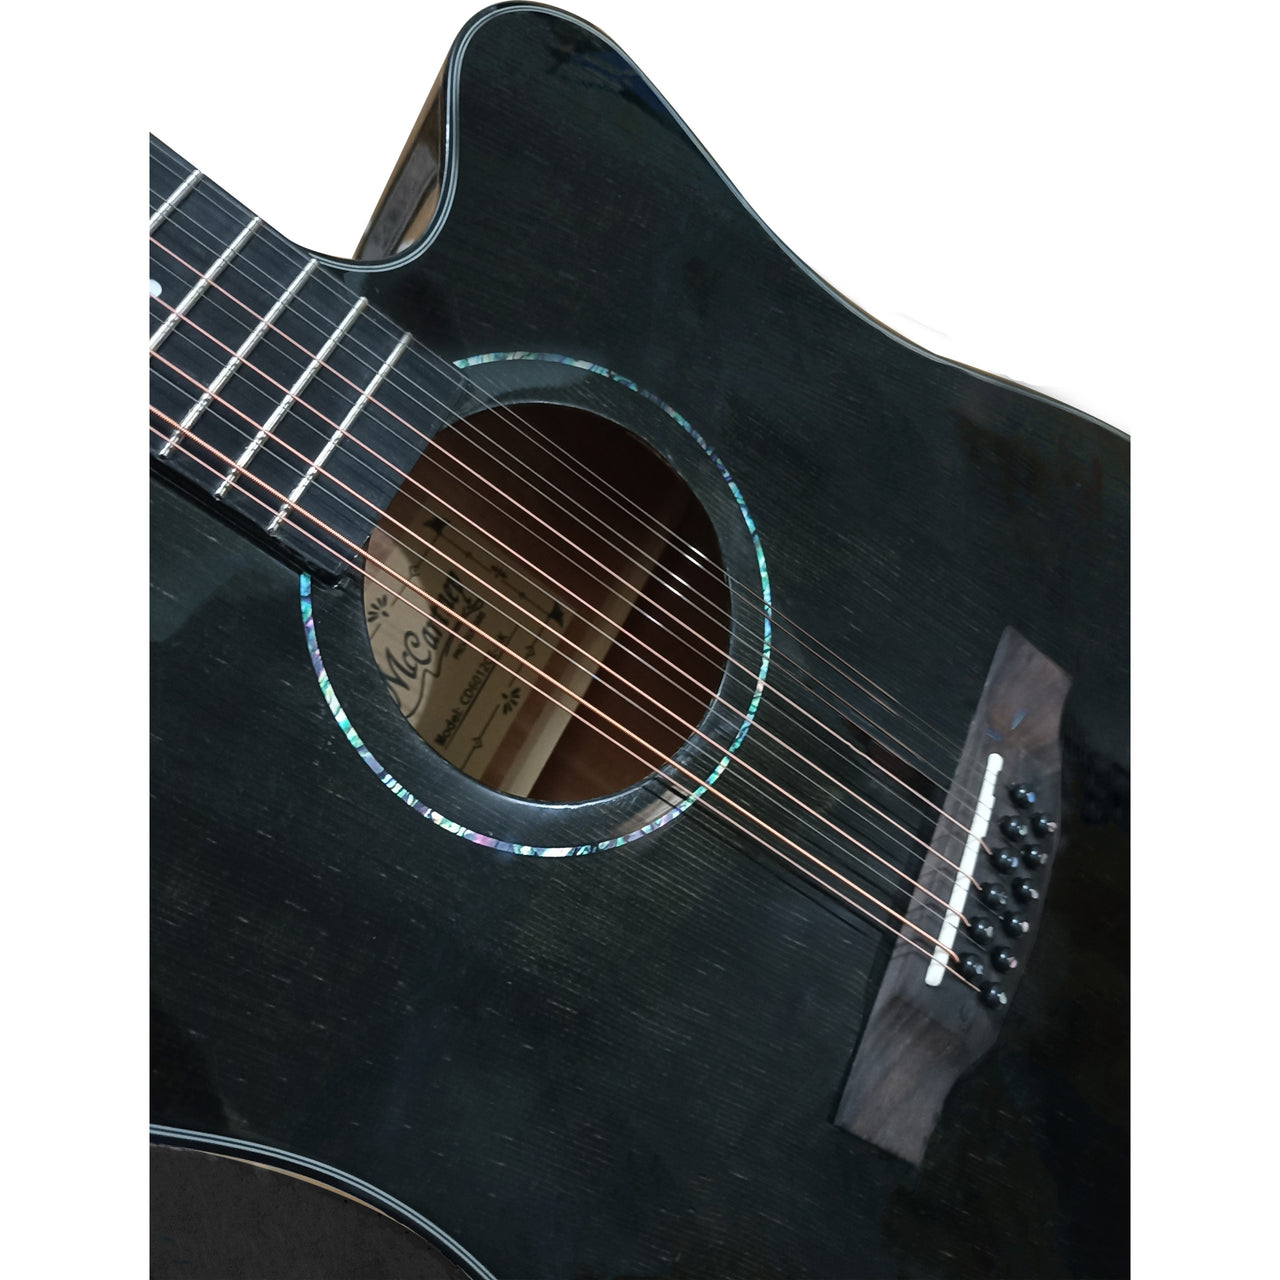 Guitarra Electroacustica Mc Cartney Cd-6012-bk Negra 12 Cuerdas